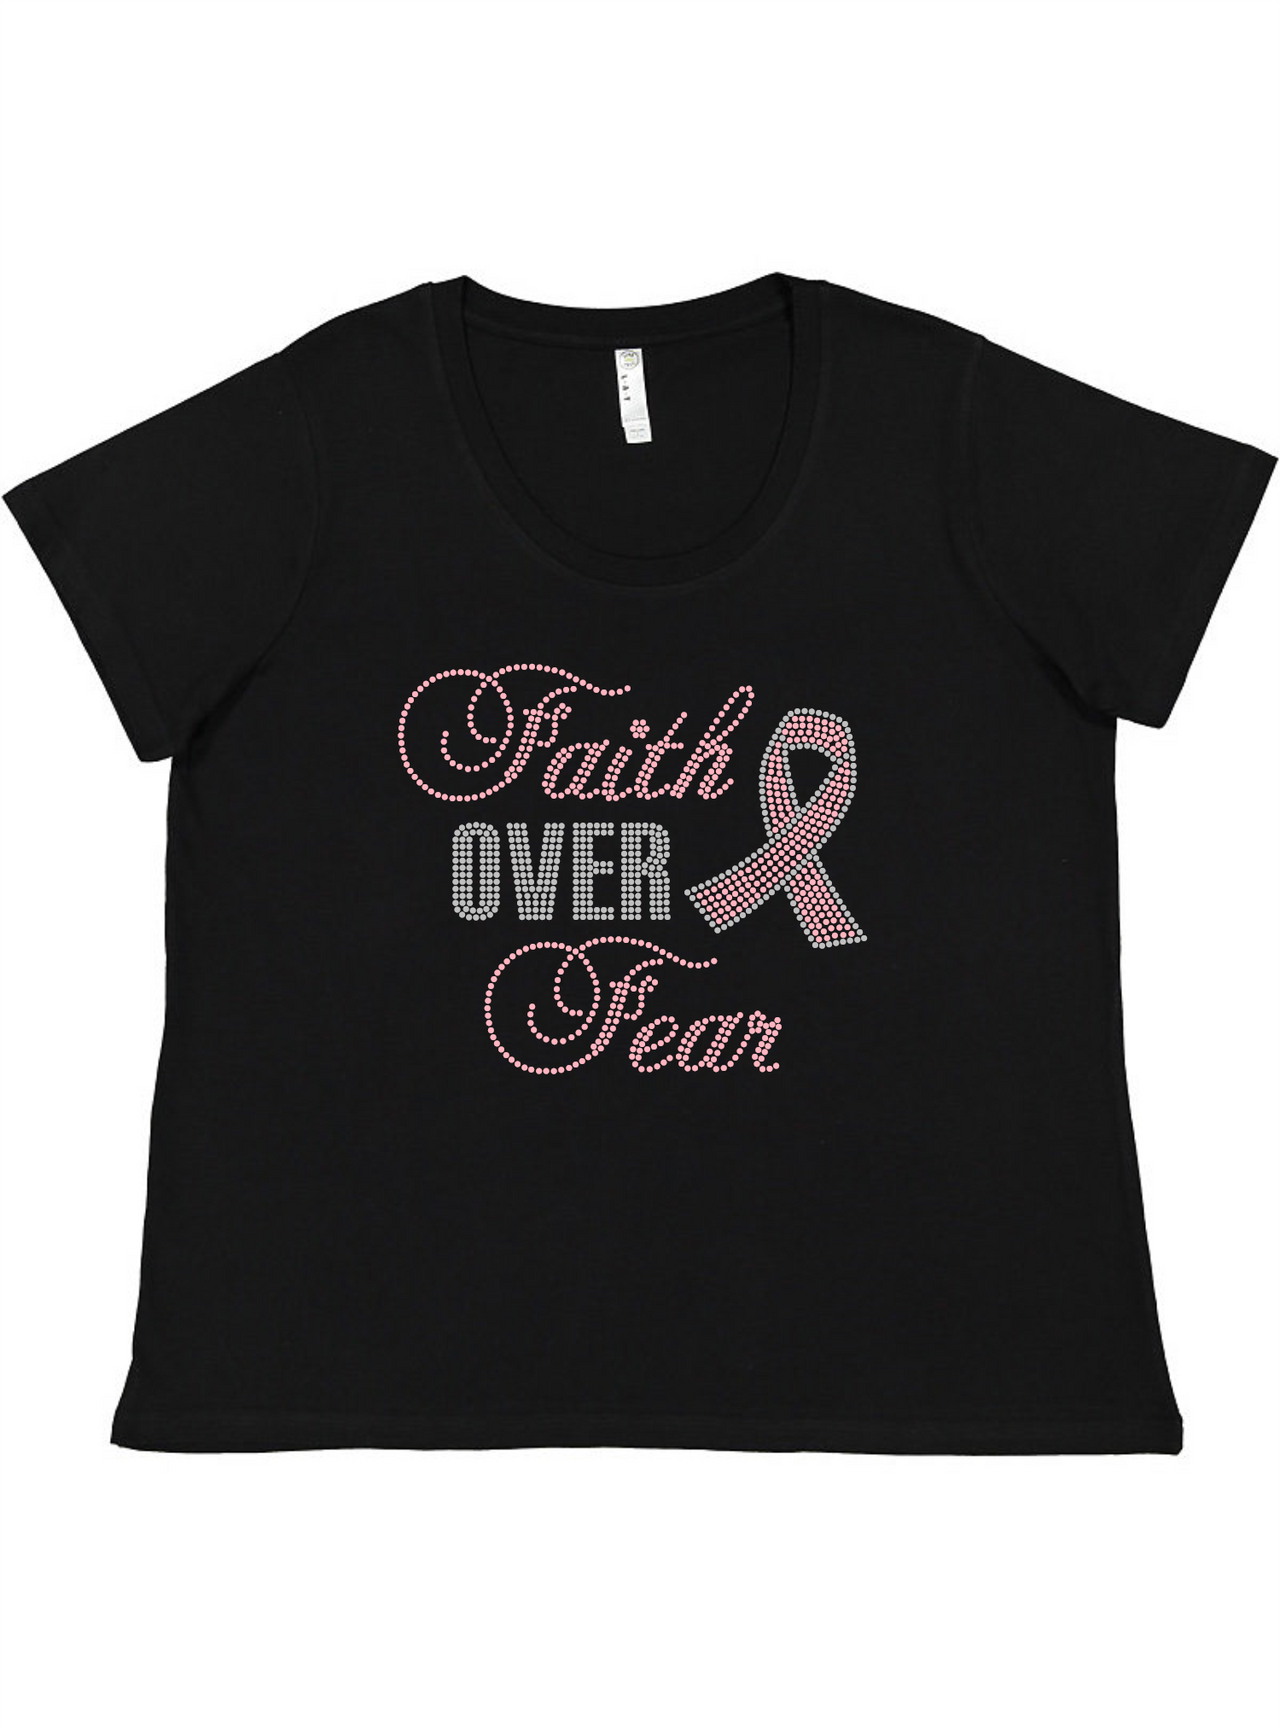 Faith Over Fear Ladies Tee Ladies Shirt by Akron Pride Custom Tees | Akron Pride Custom Tees